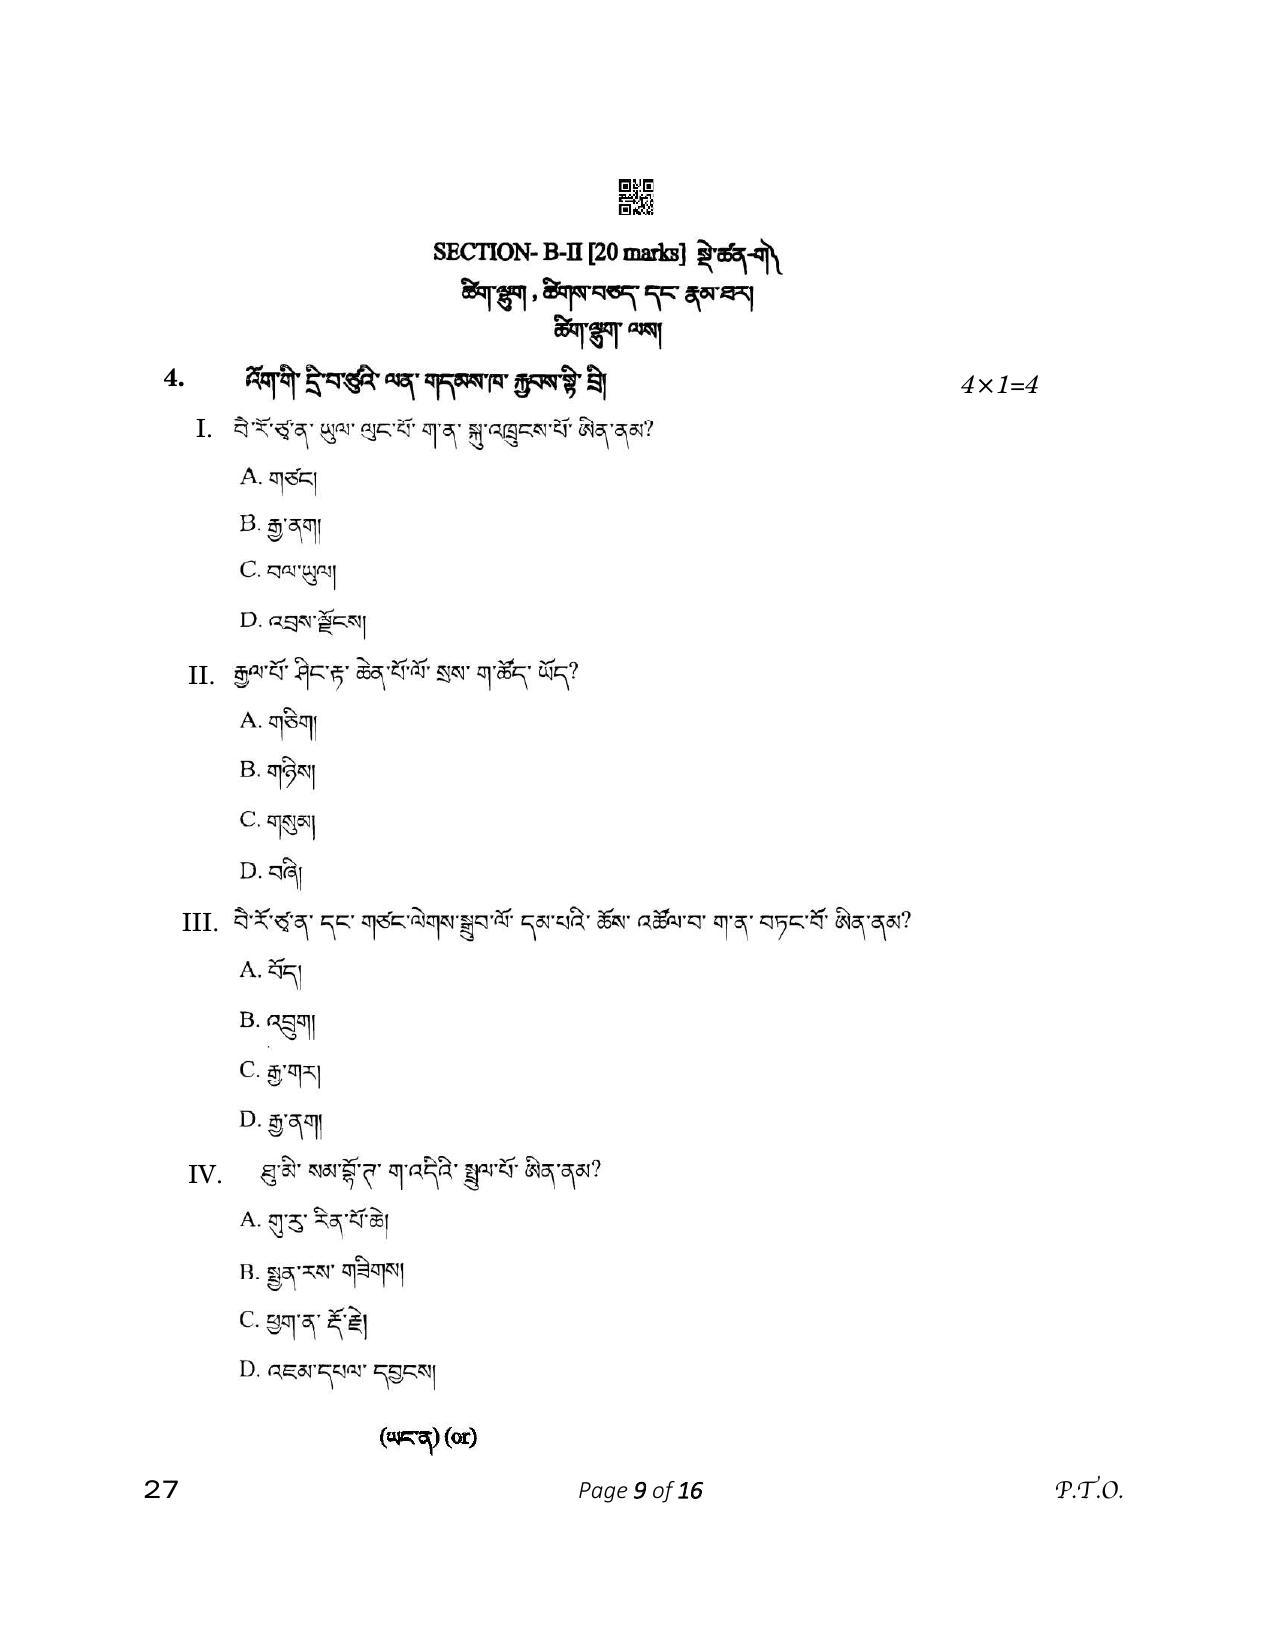 CBSE Class 12 27_Bhutia 2023 2023 Question Paper - Page 9